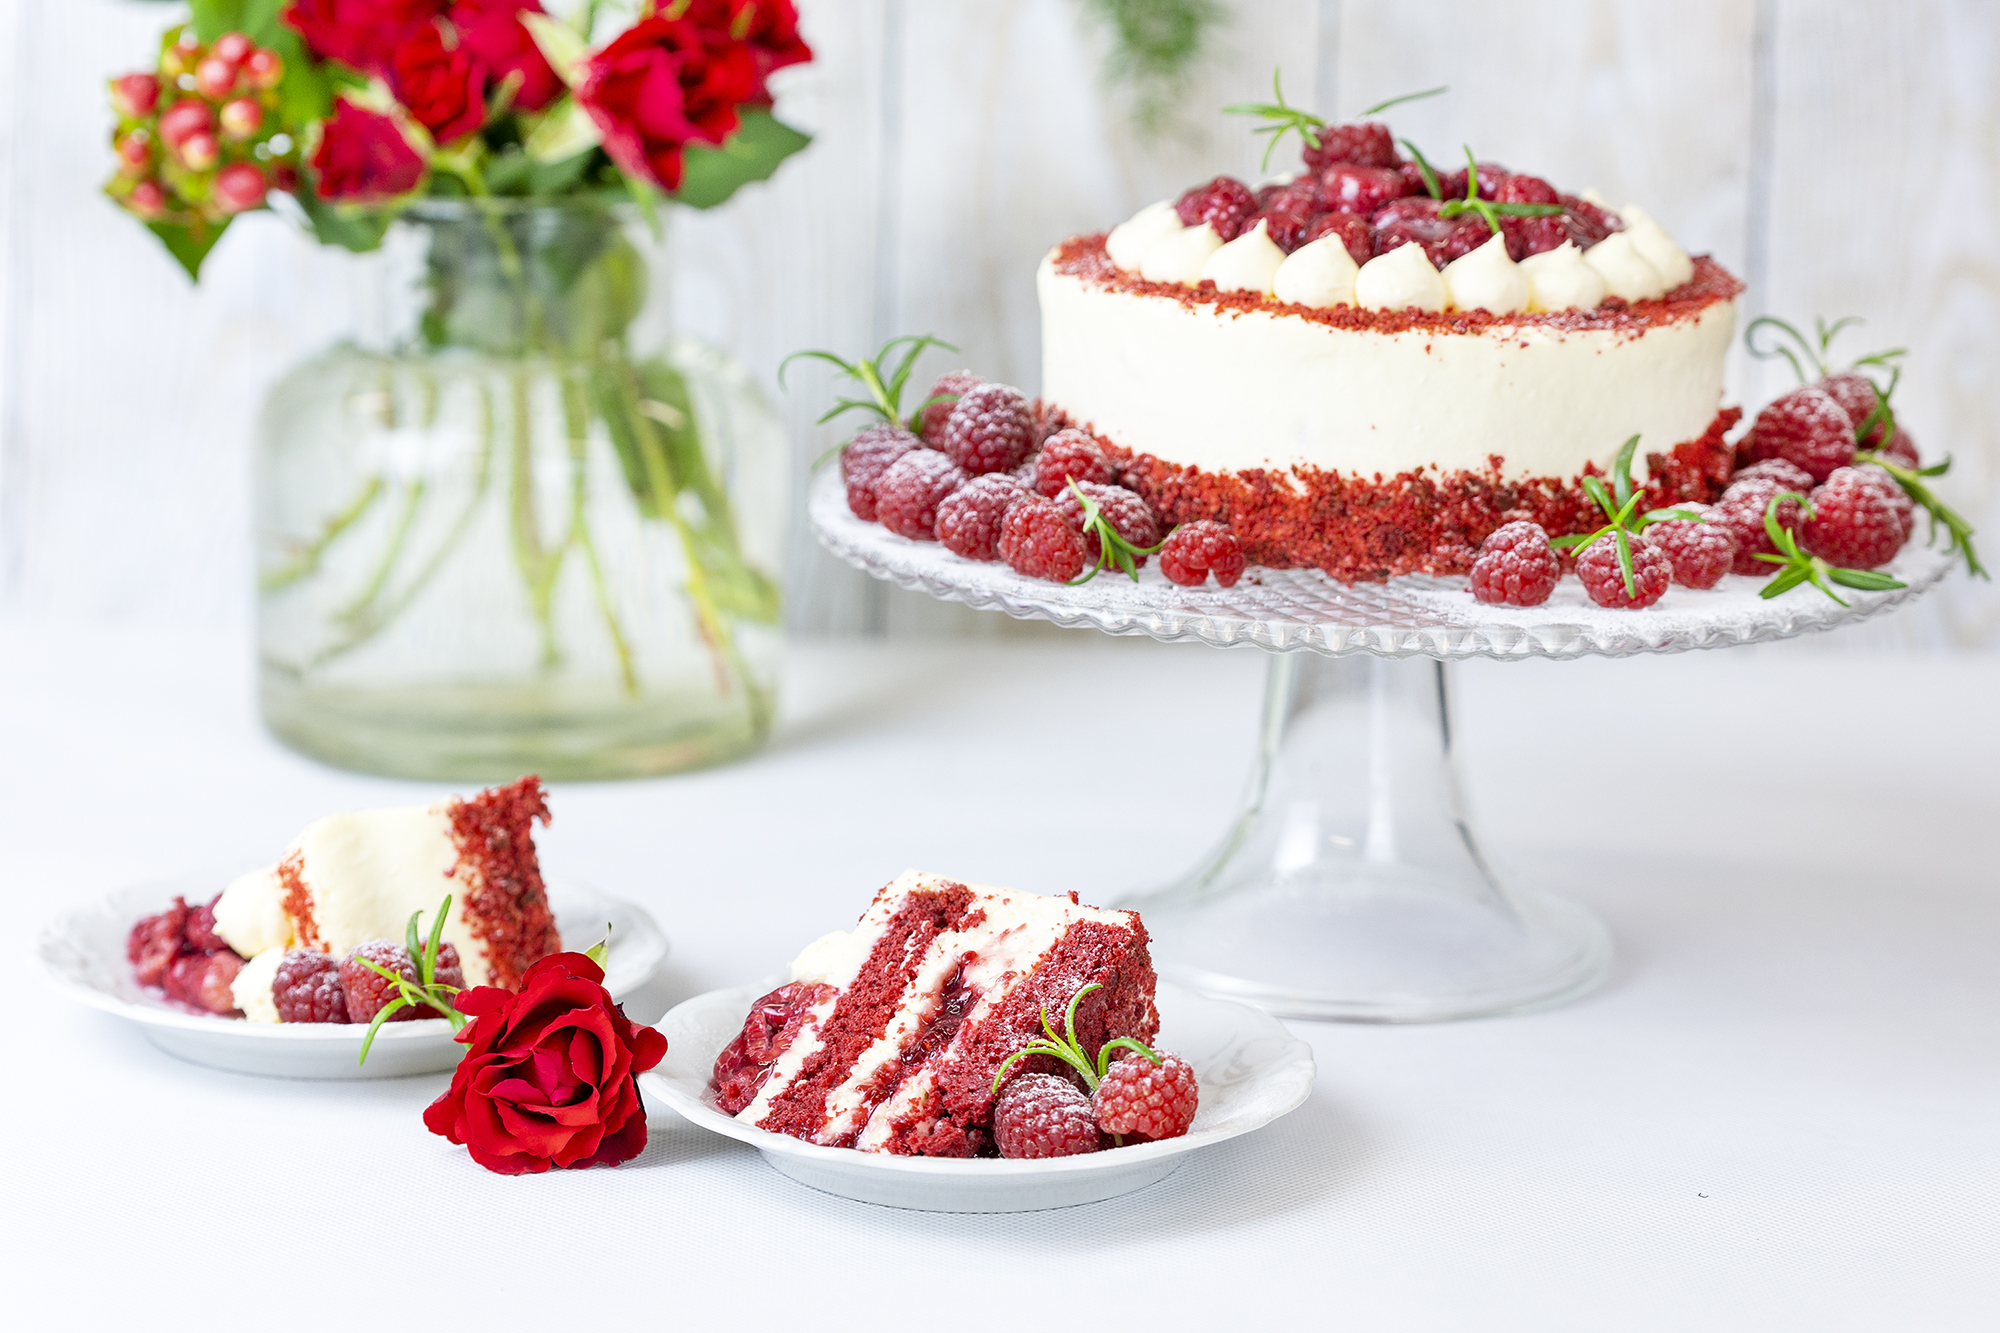 Come decorare torte e dessert? – frutta e decorazioni in pasticceria -  Cukiernia Jacek Placek - Torte fatte in casa Torte Pierogi